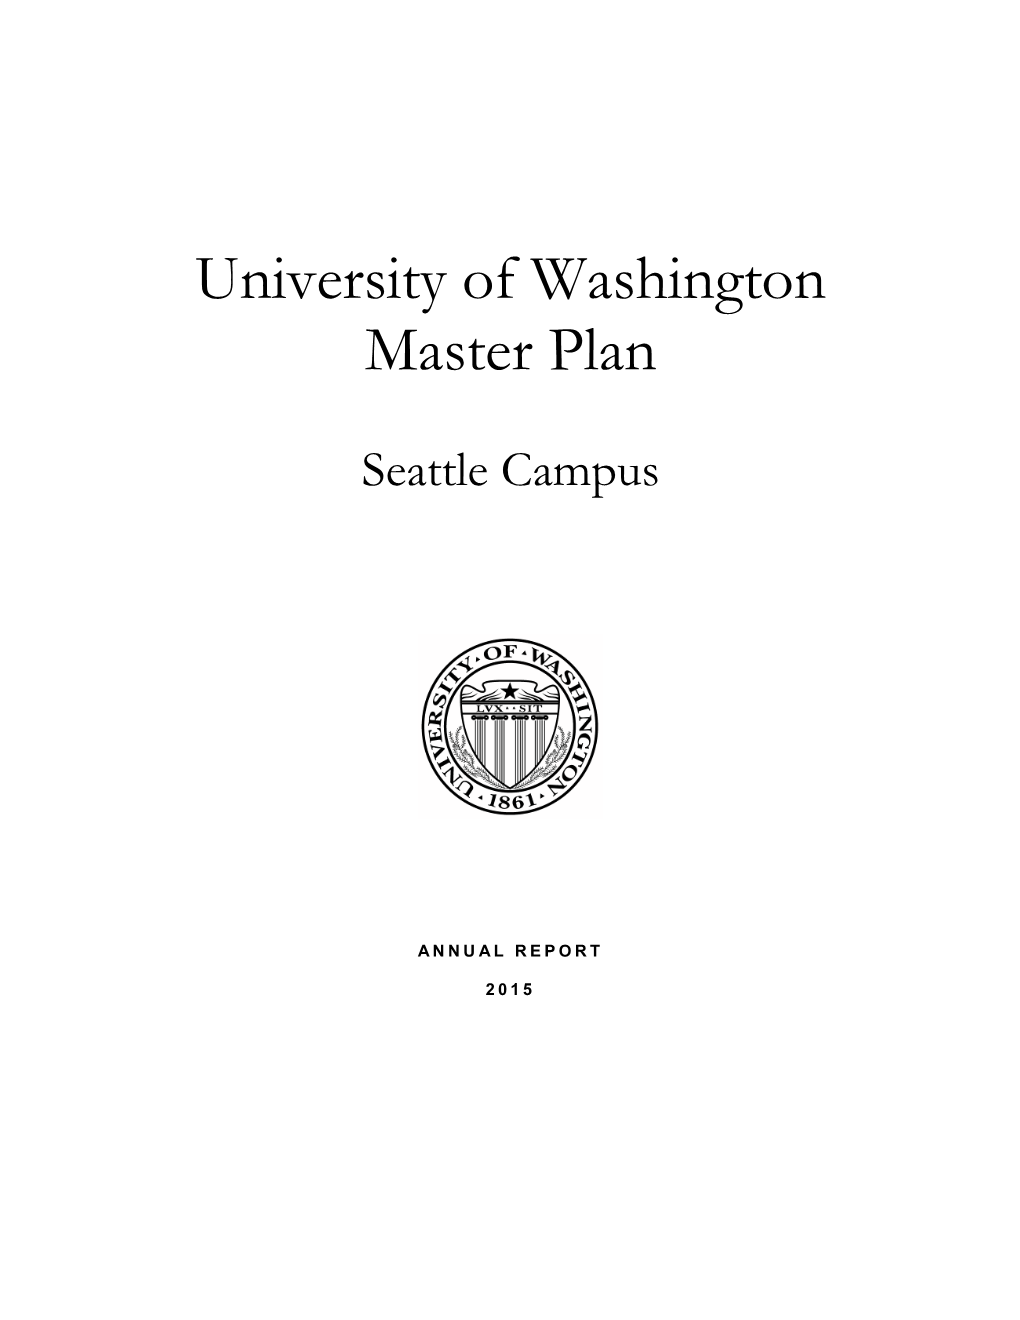 2015 Annual Report on University of Washington Master Plan, Seattle